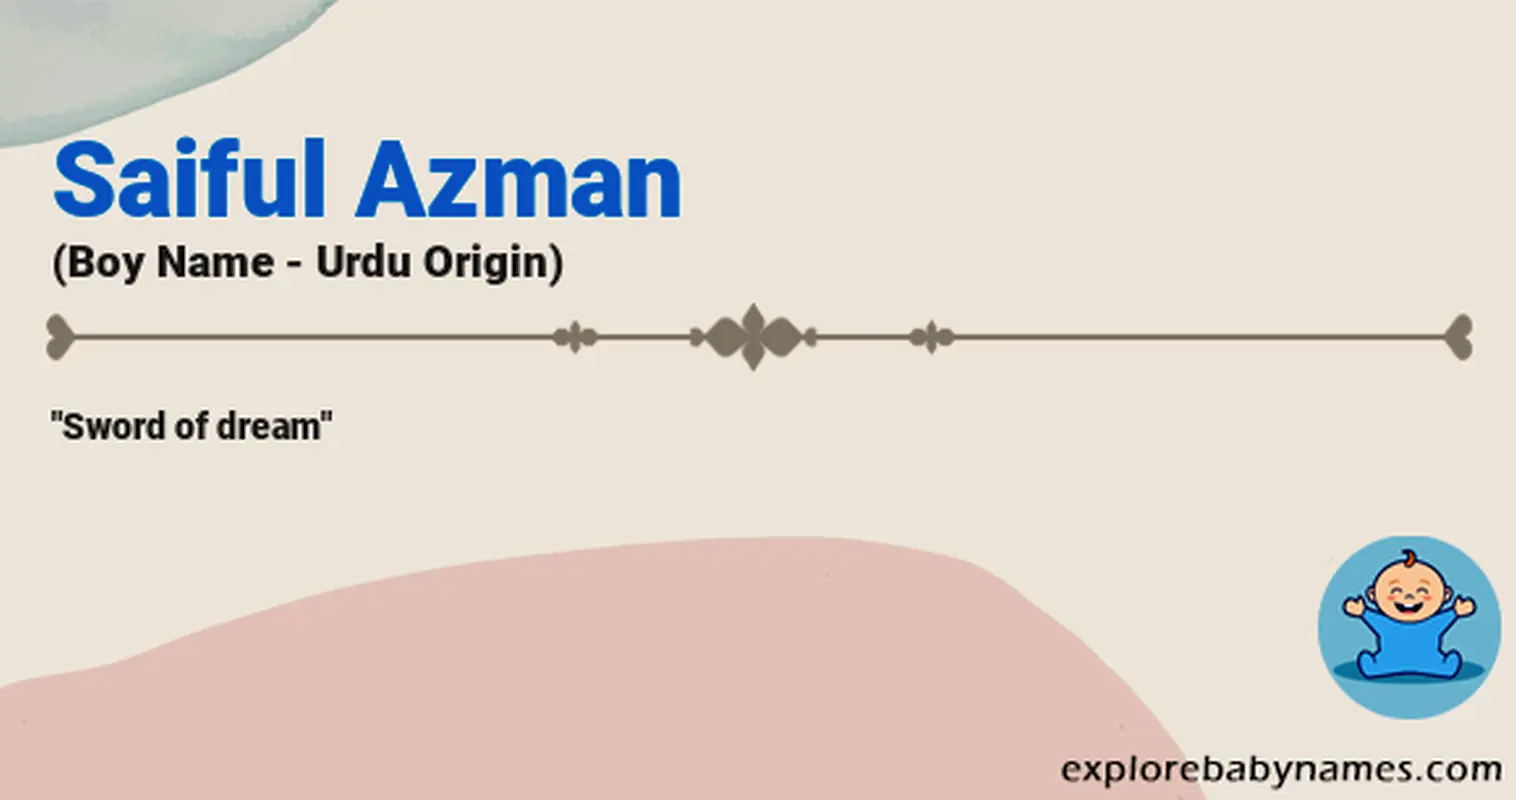 Meaning of Saiful Azman